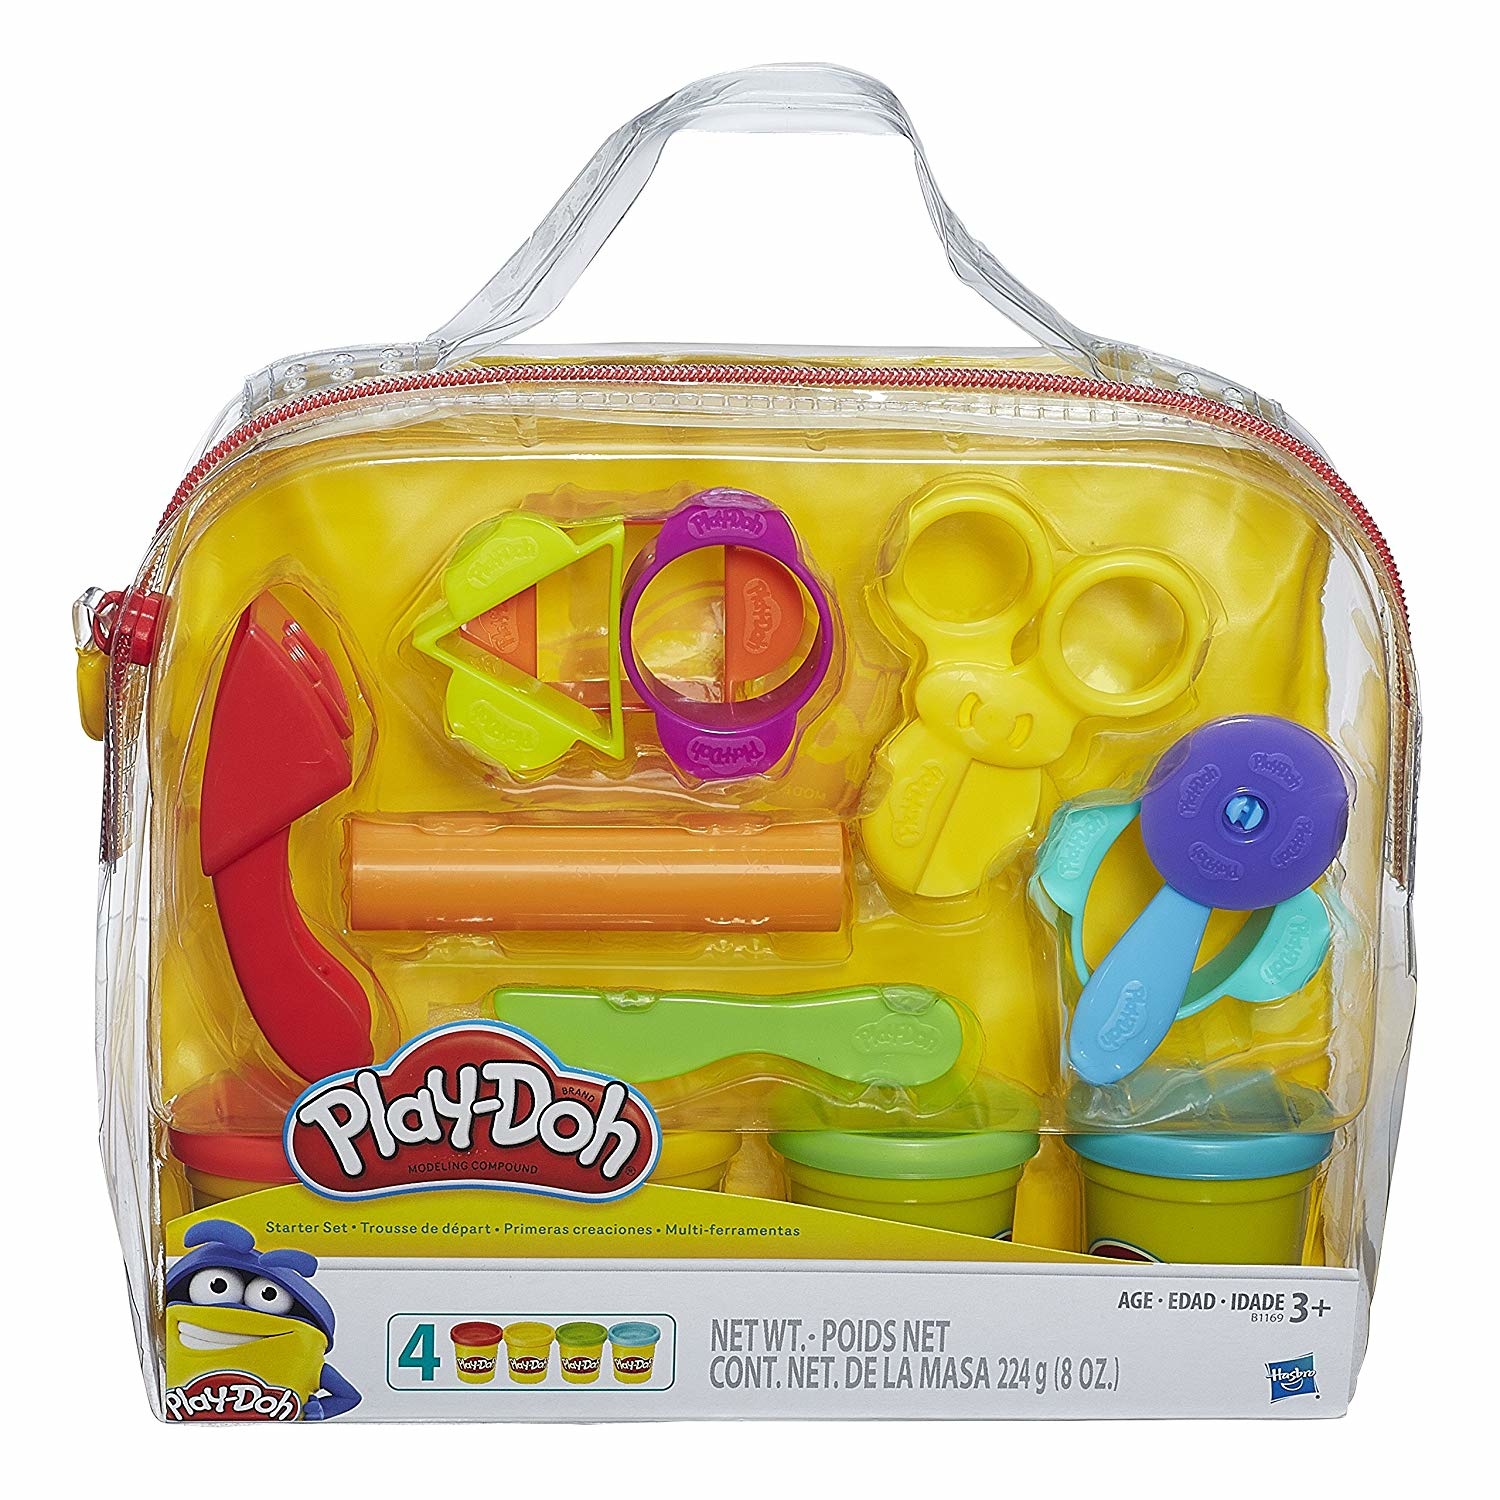 Купить наборы пластилина. Набор b1169 Play-Doh пластилина "базовый" Hasbro. Набор Play-Doh "базовый". Плей дох наборы. Плей дох пластилин.